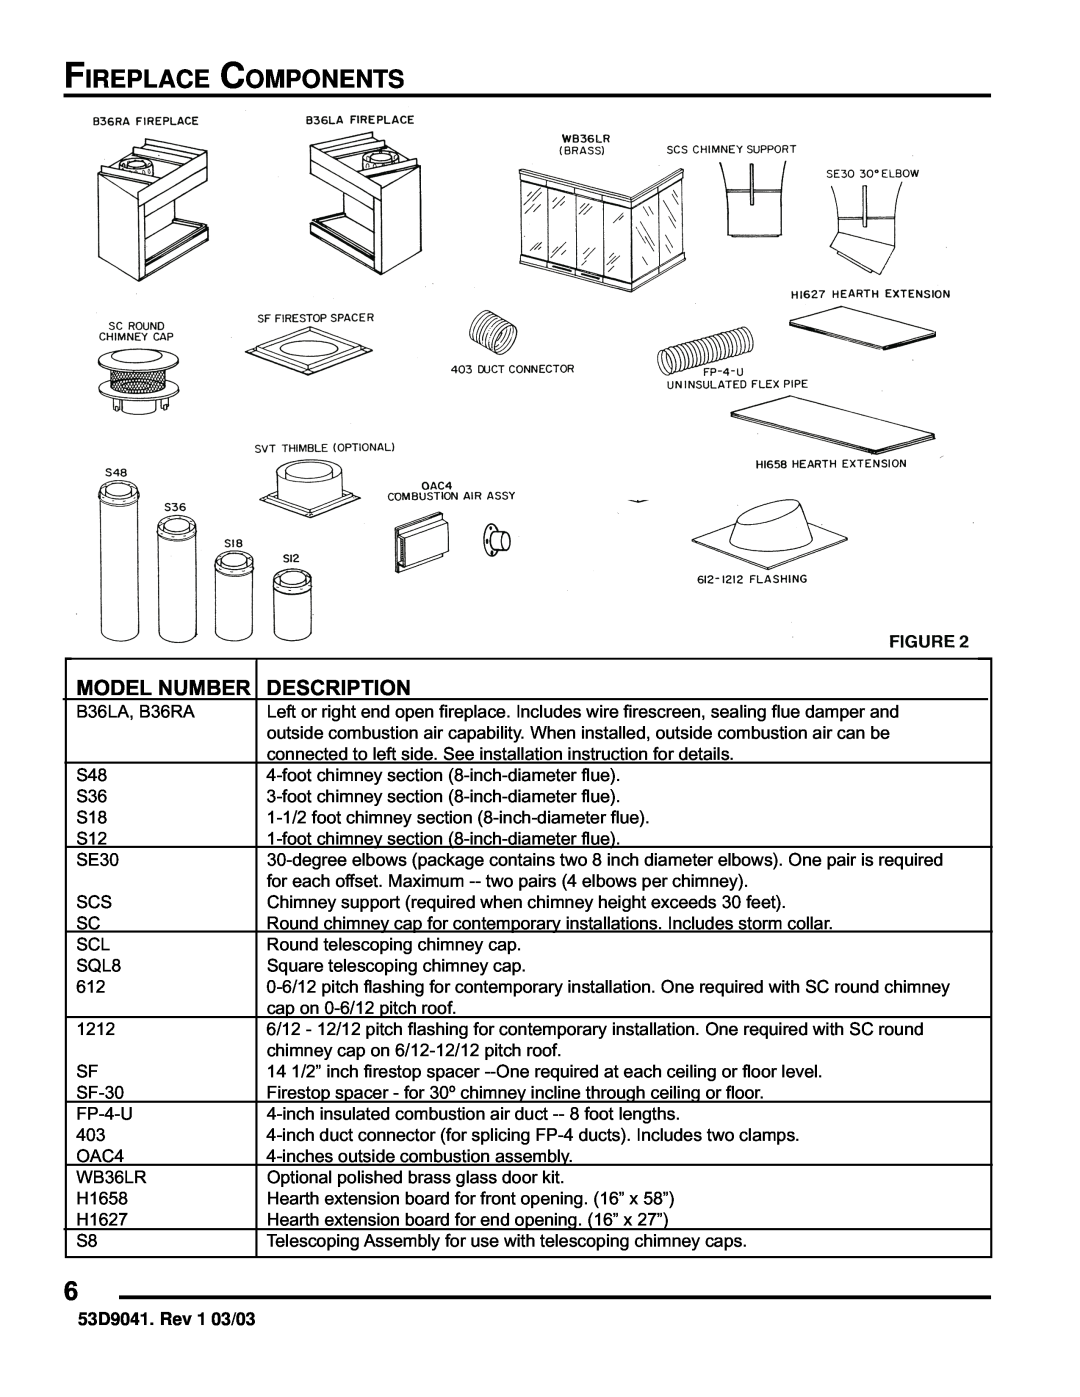 Martin Fireplaces B36RA, B36LA manual Fireplace Components, Model Number, Description, 53D9041. Rev 1 03/03 